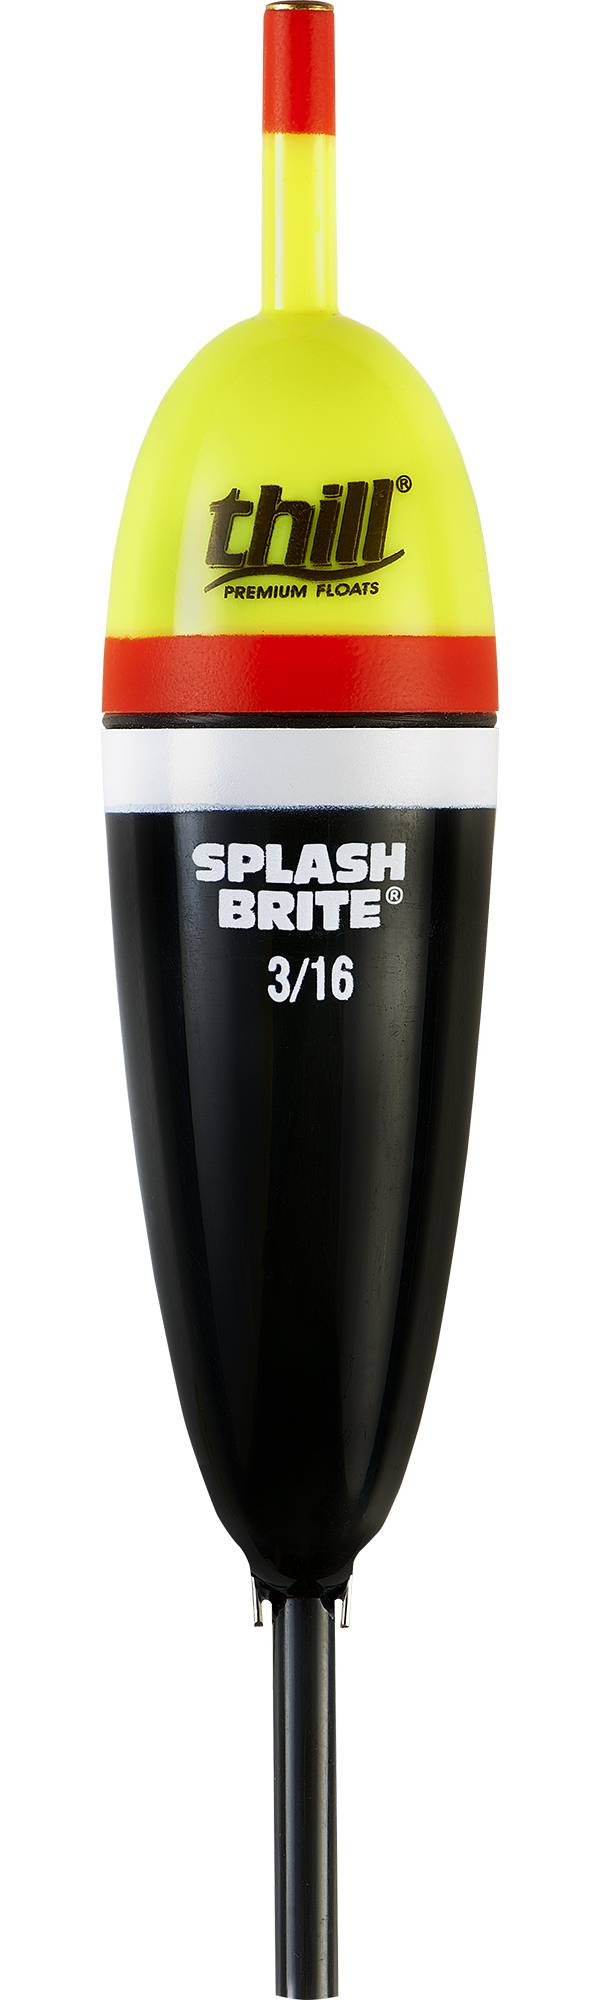 Thill Splash Brite Float product image